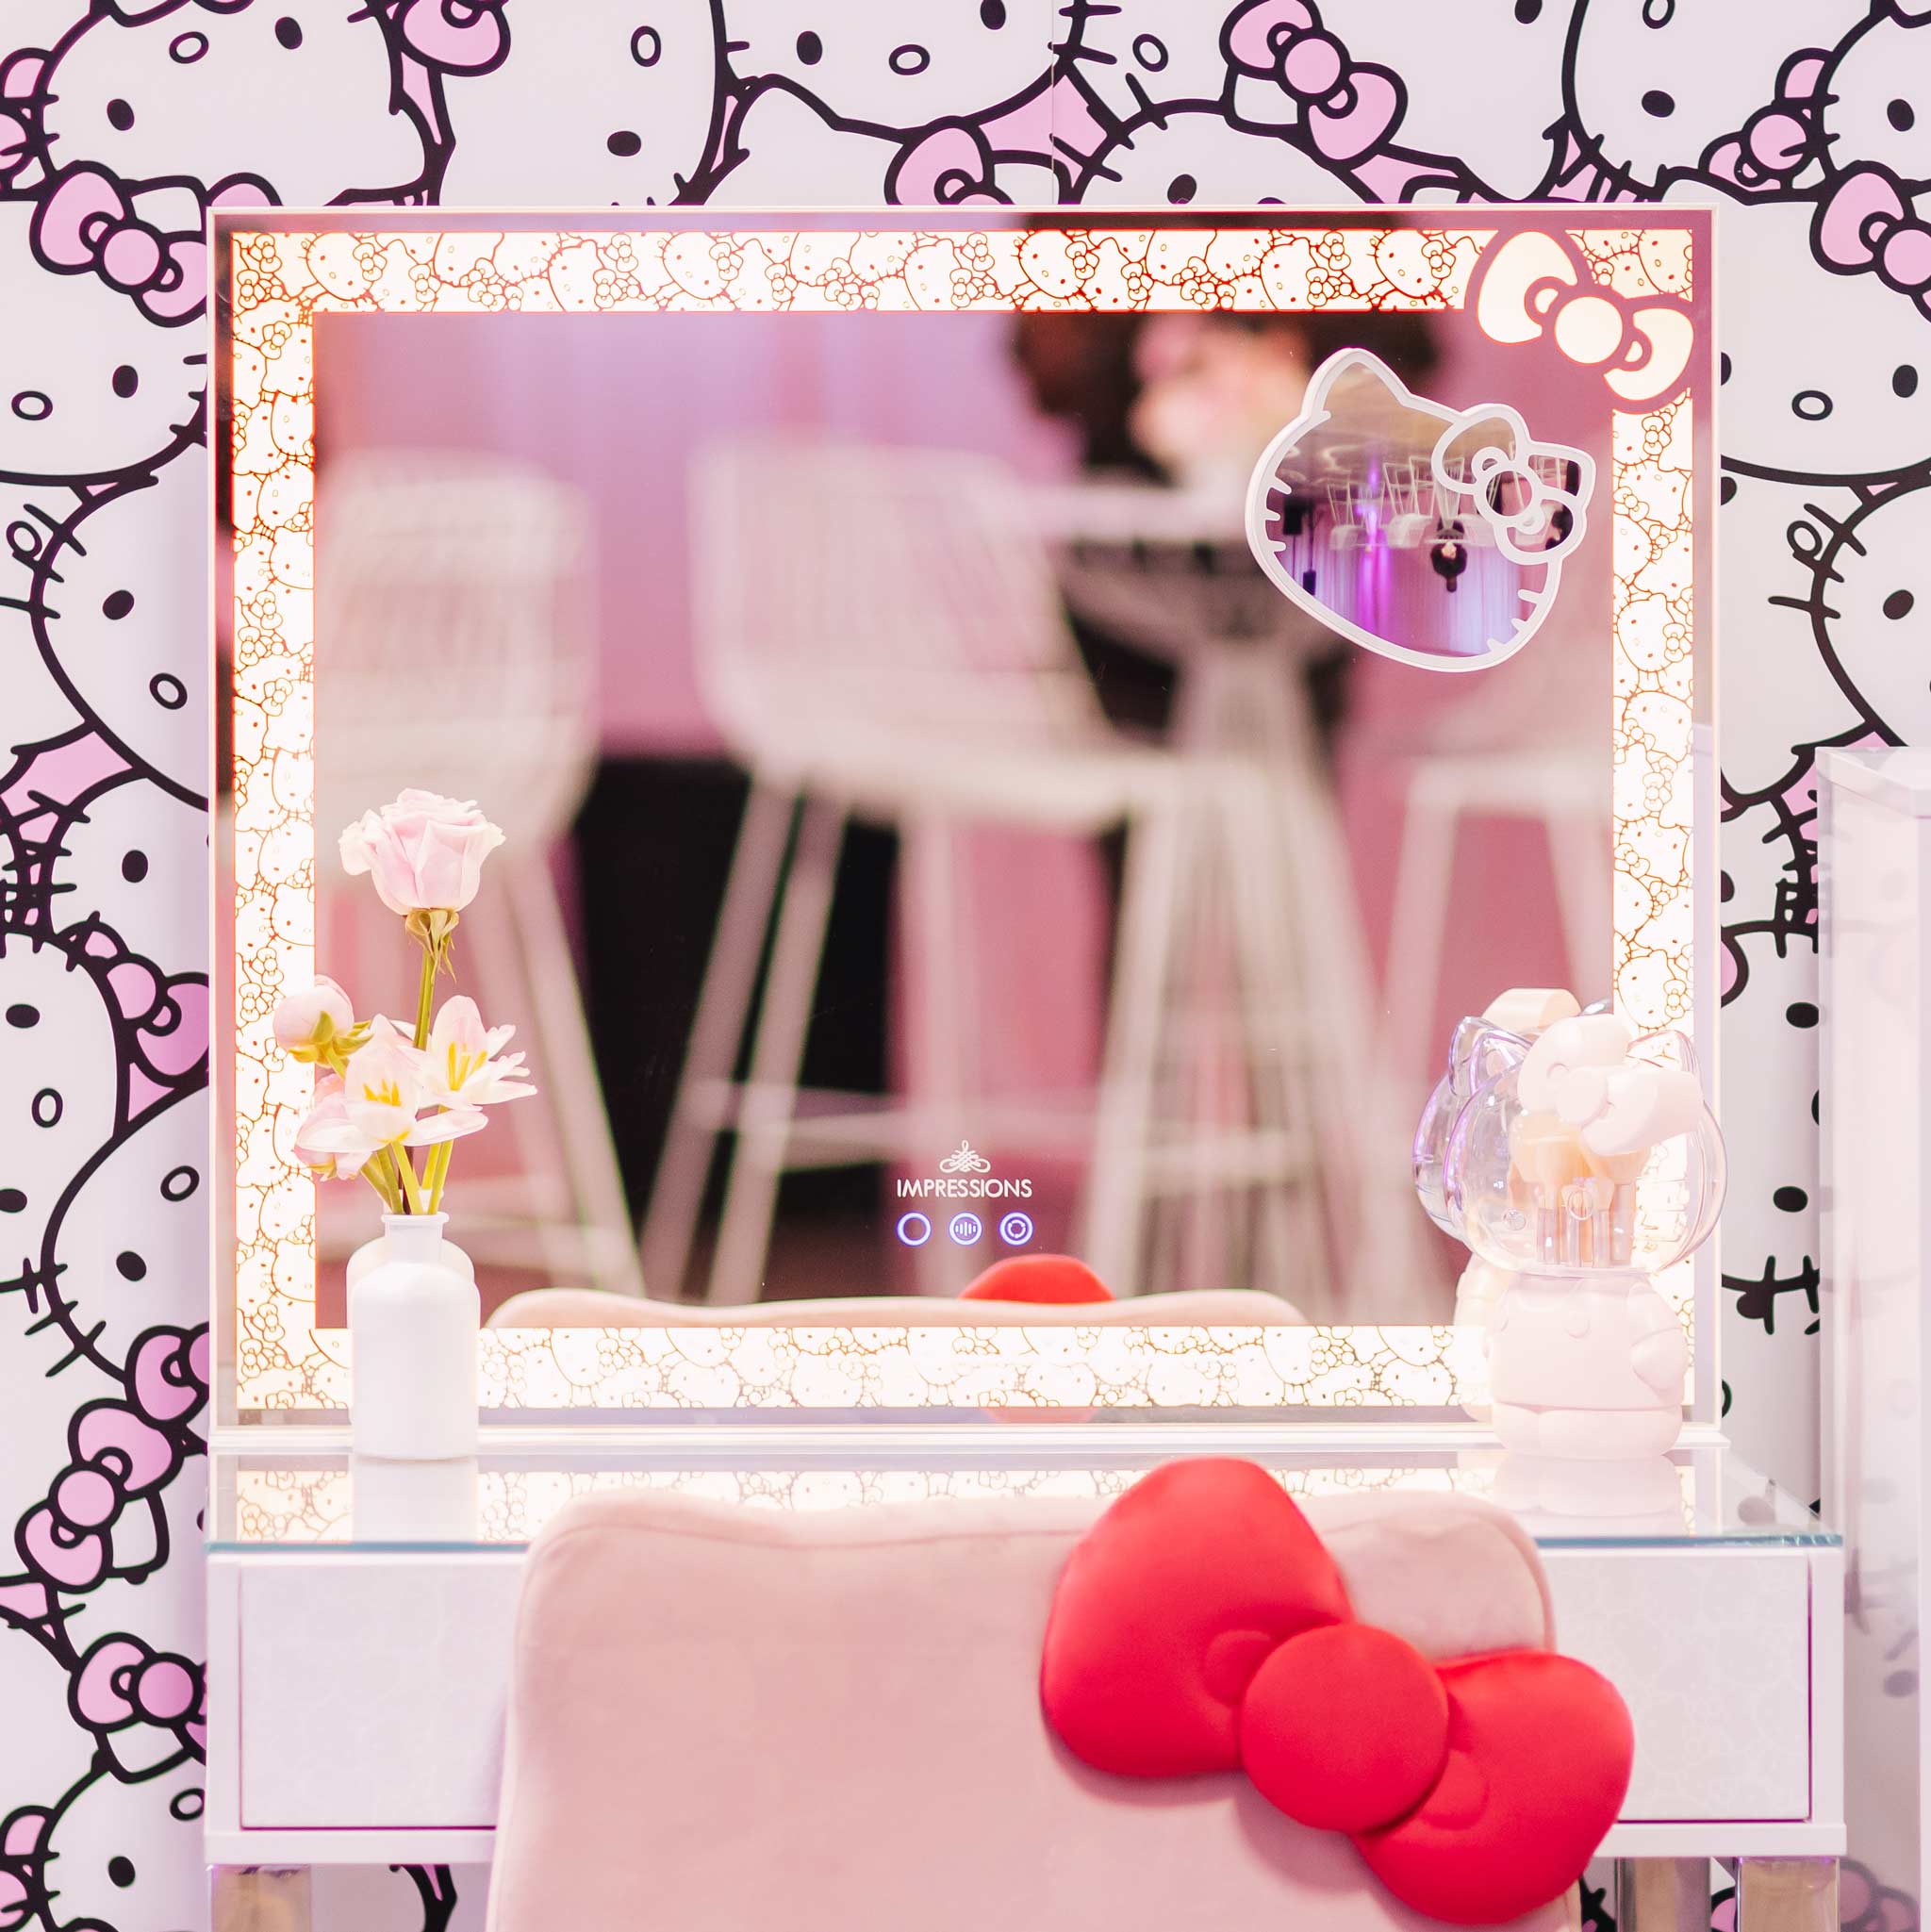 Hello Kitty LED Wall Mirror • Impressions Vanity Co.